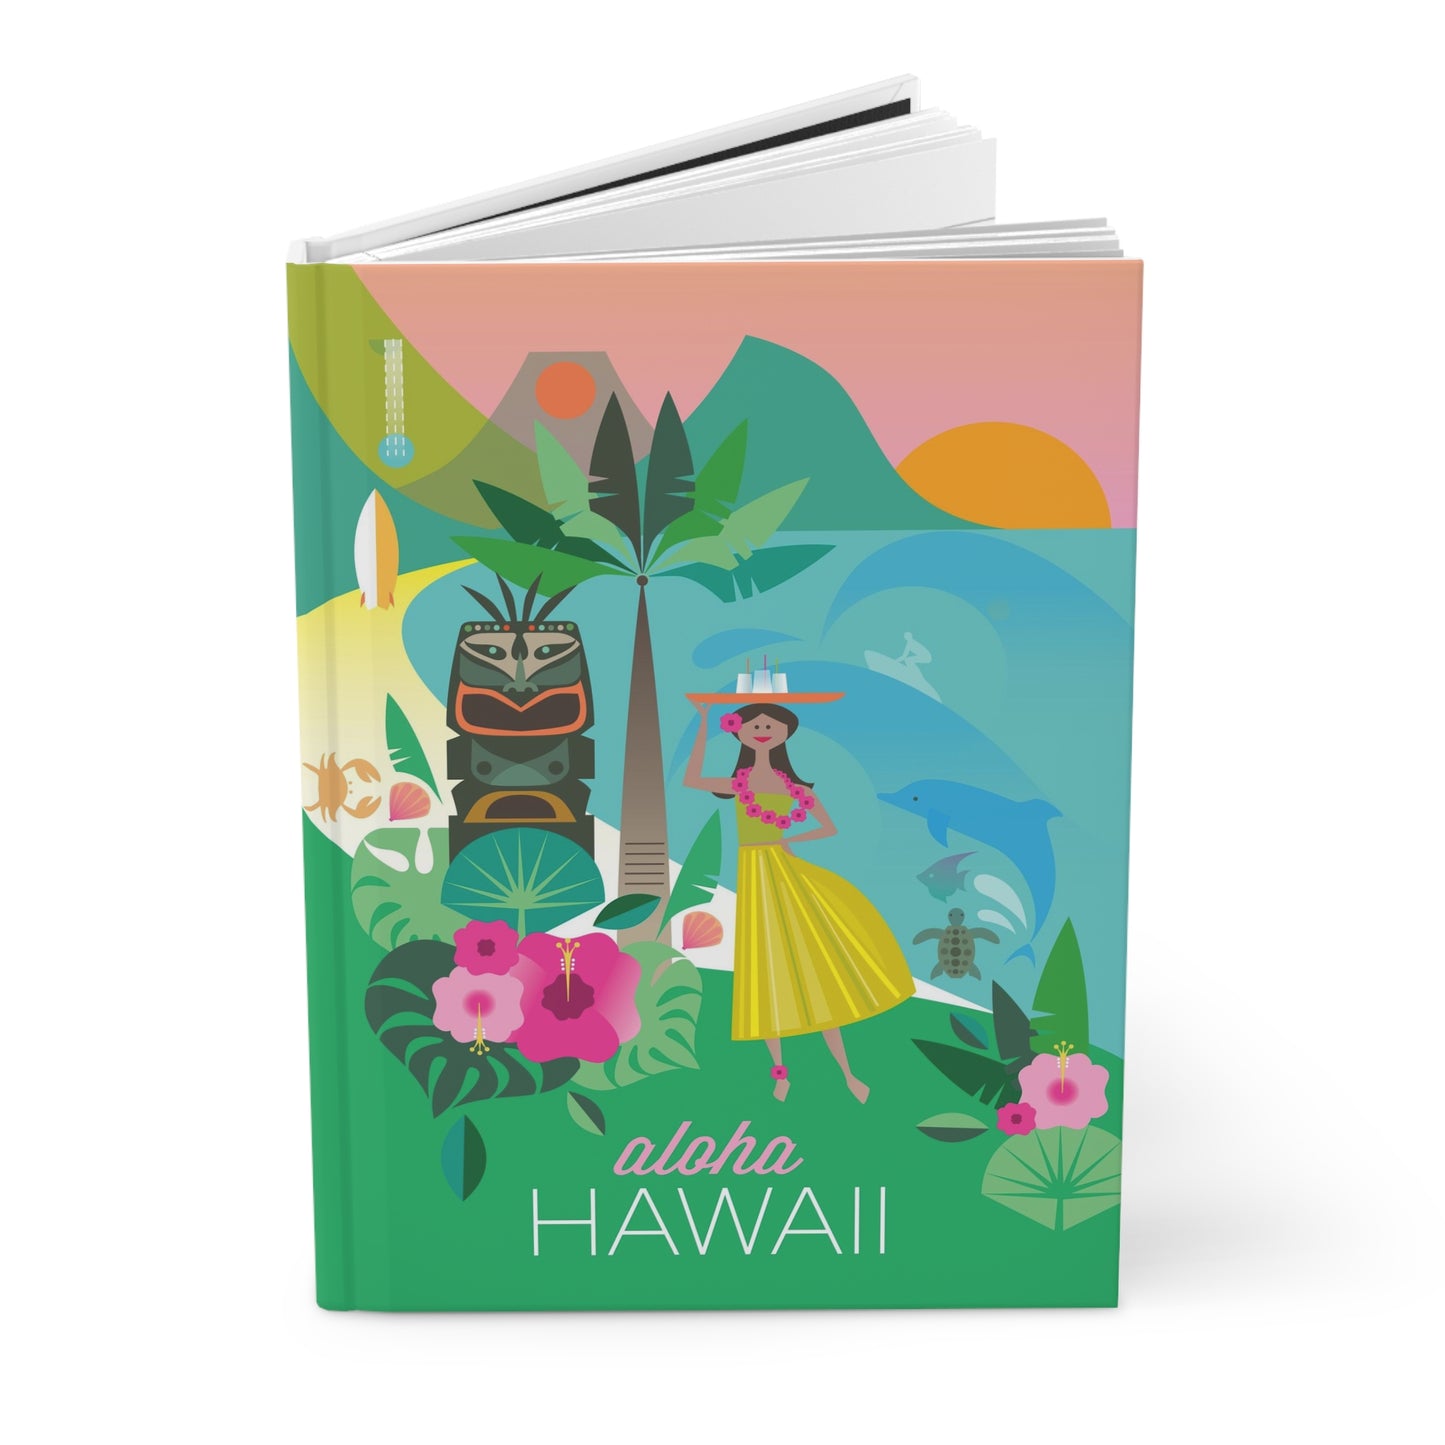 Hawaii Hardcover Journal